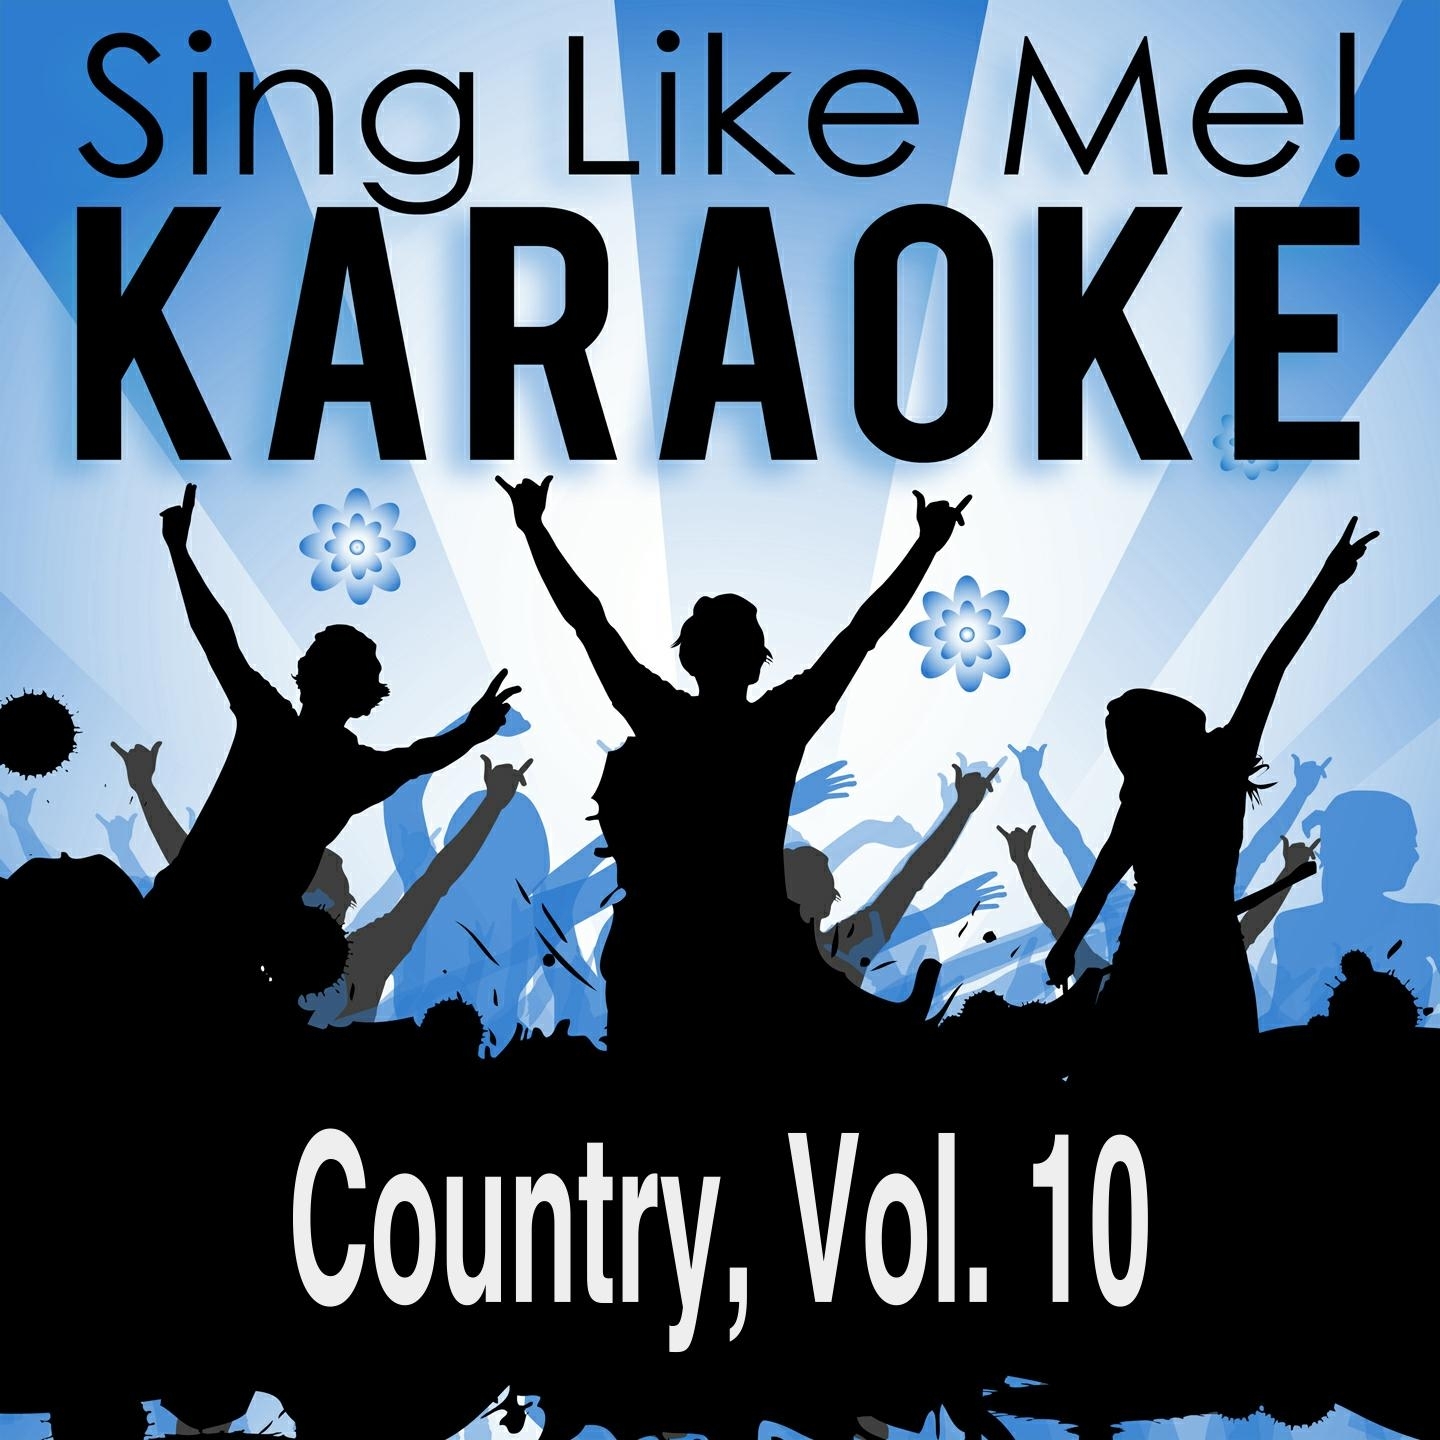 Vidalia (Karaoke Version) (Originally Performed By Sammy Kershaw)